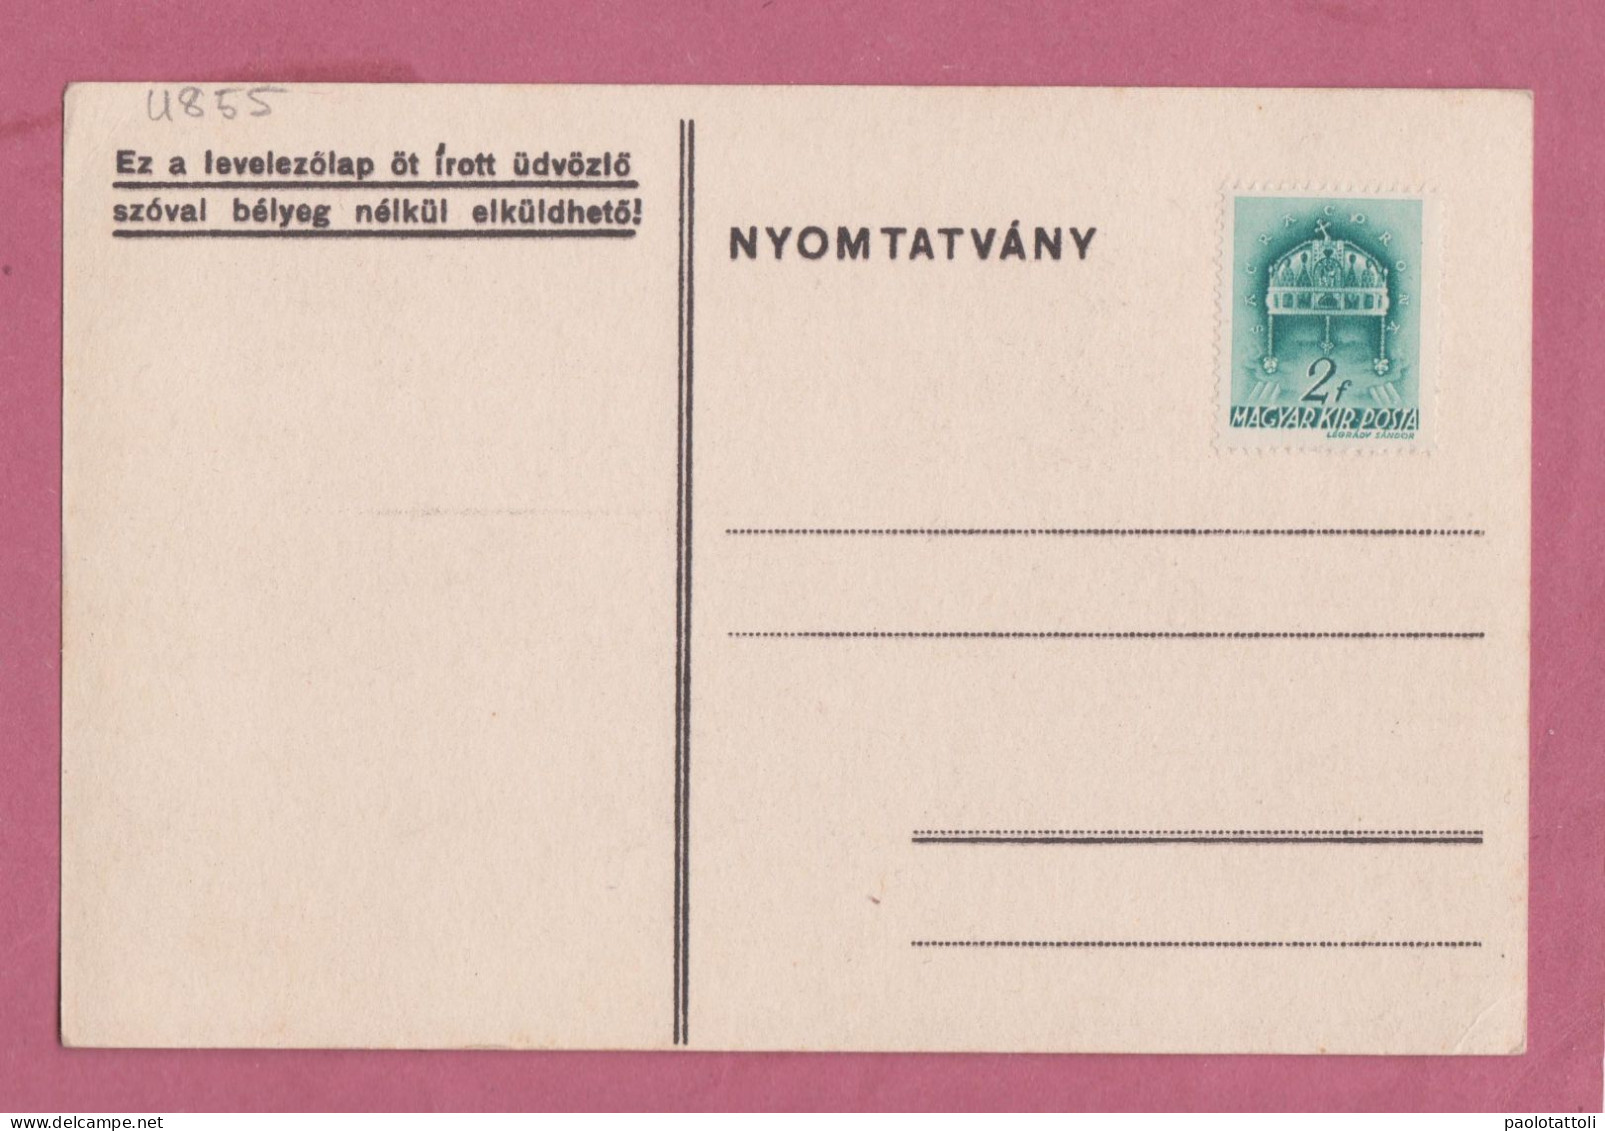 Magyar, Unghery- Propaganda Post Card.- Proteggi Il Tuo Raccolto Dal Gelo.protect Your Crop Against Frostbite- - Politieke Partijen & Verkiezingen